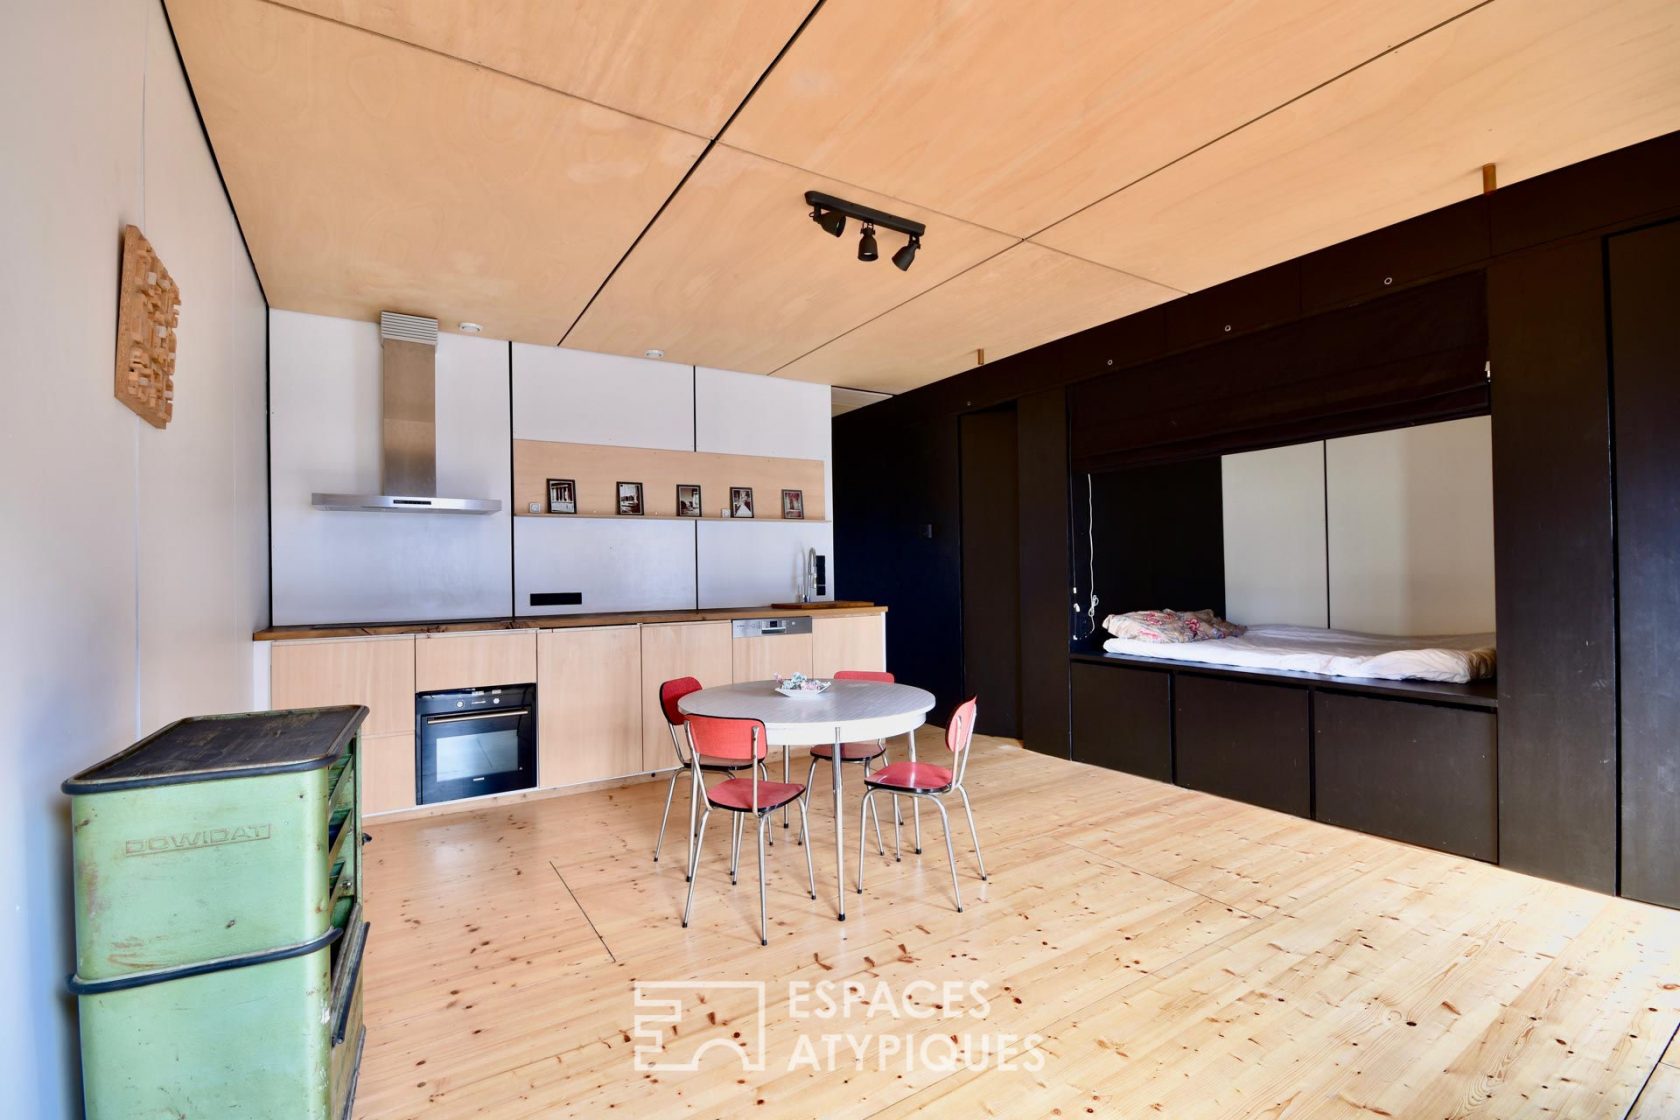 Cocoon apartment designed as a loft spirit